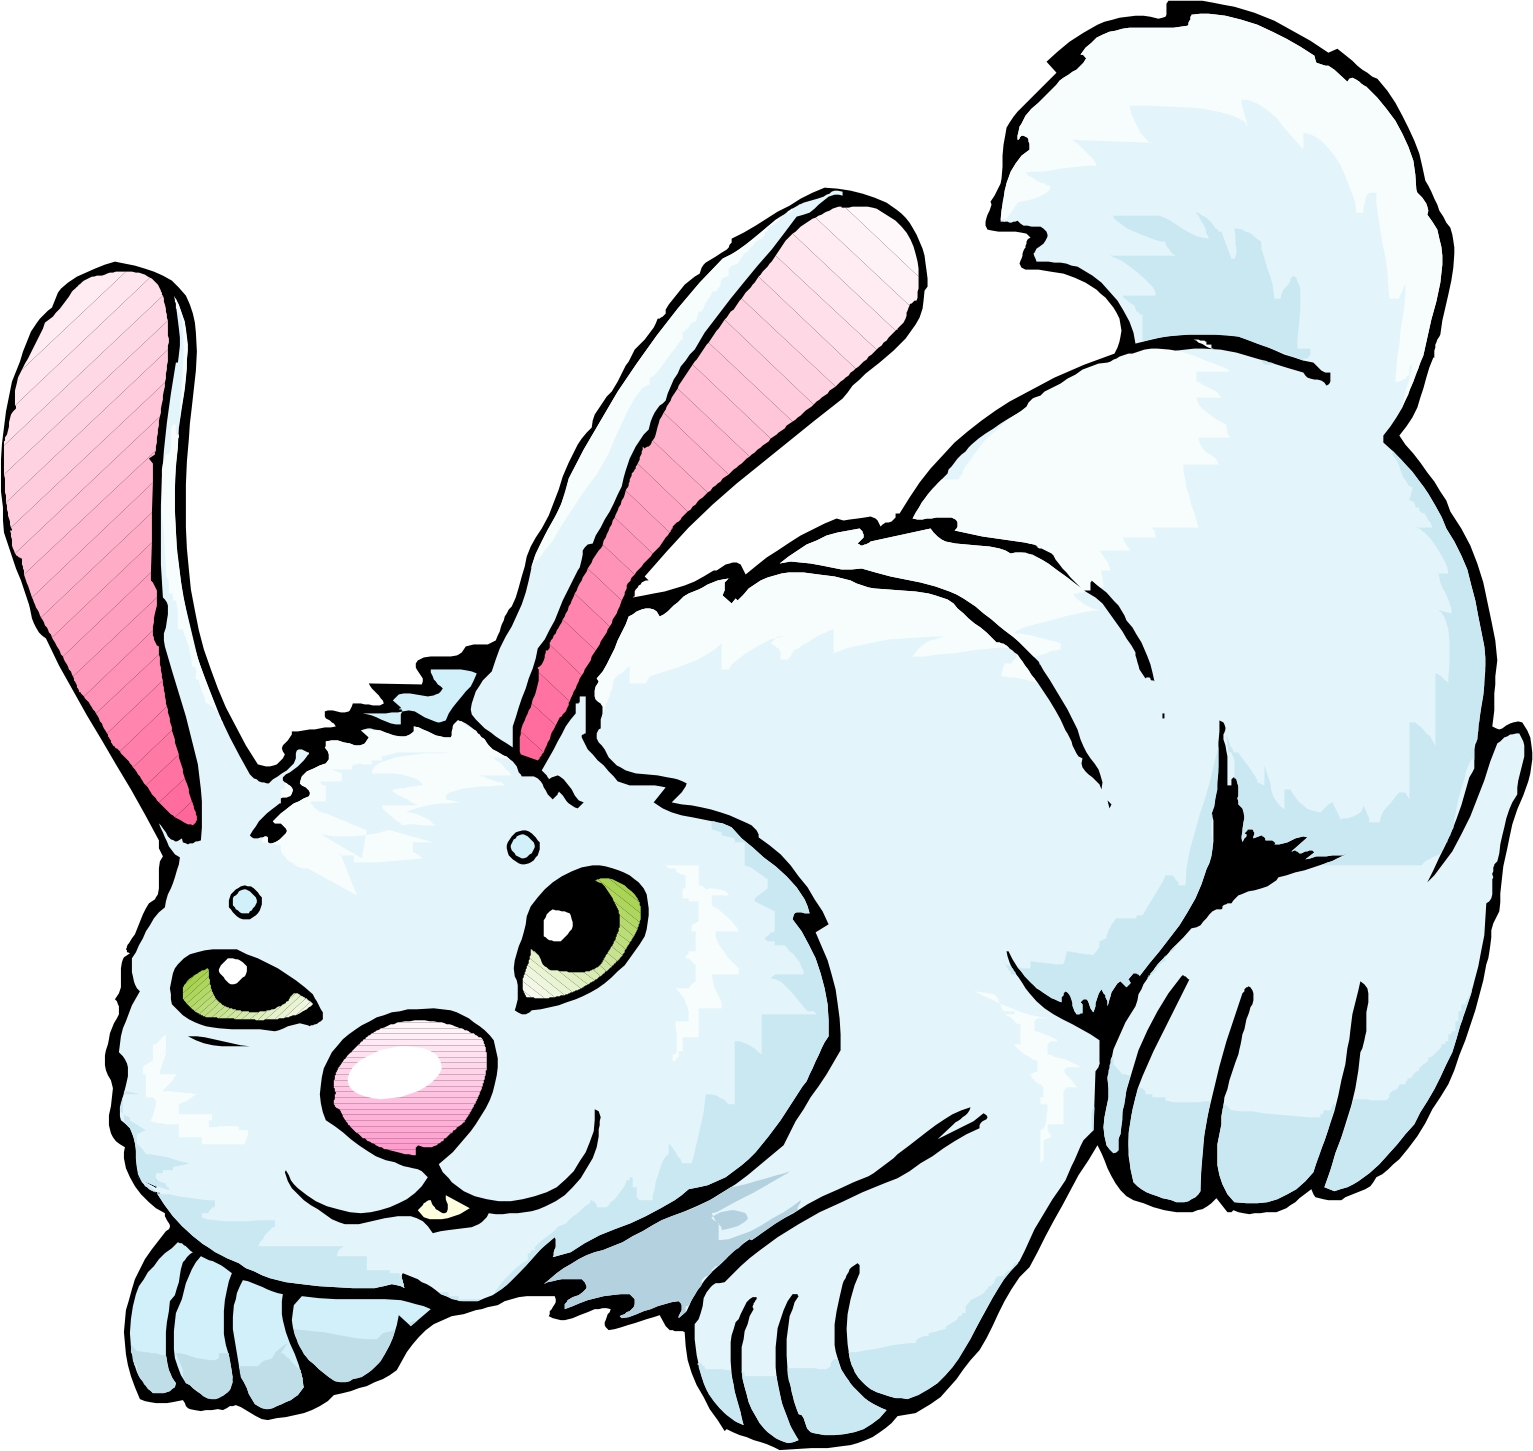 Rabbit Cartoon Drawing - ClipArt Best